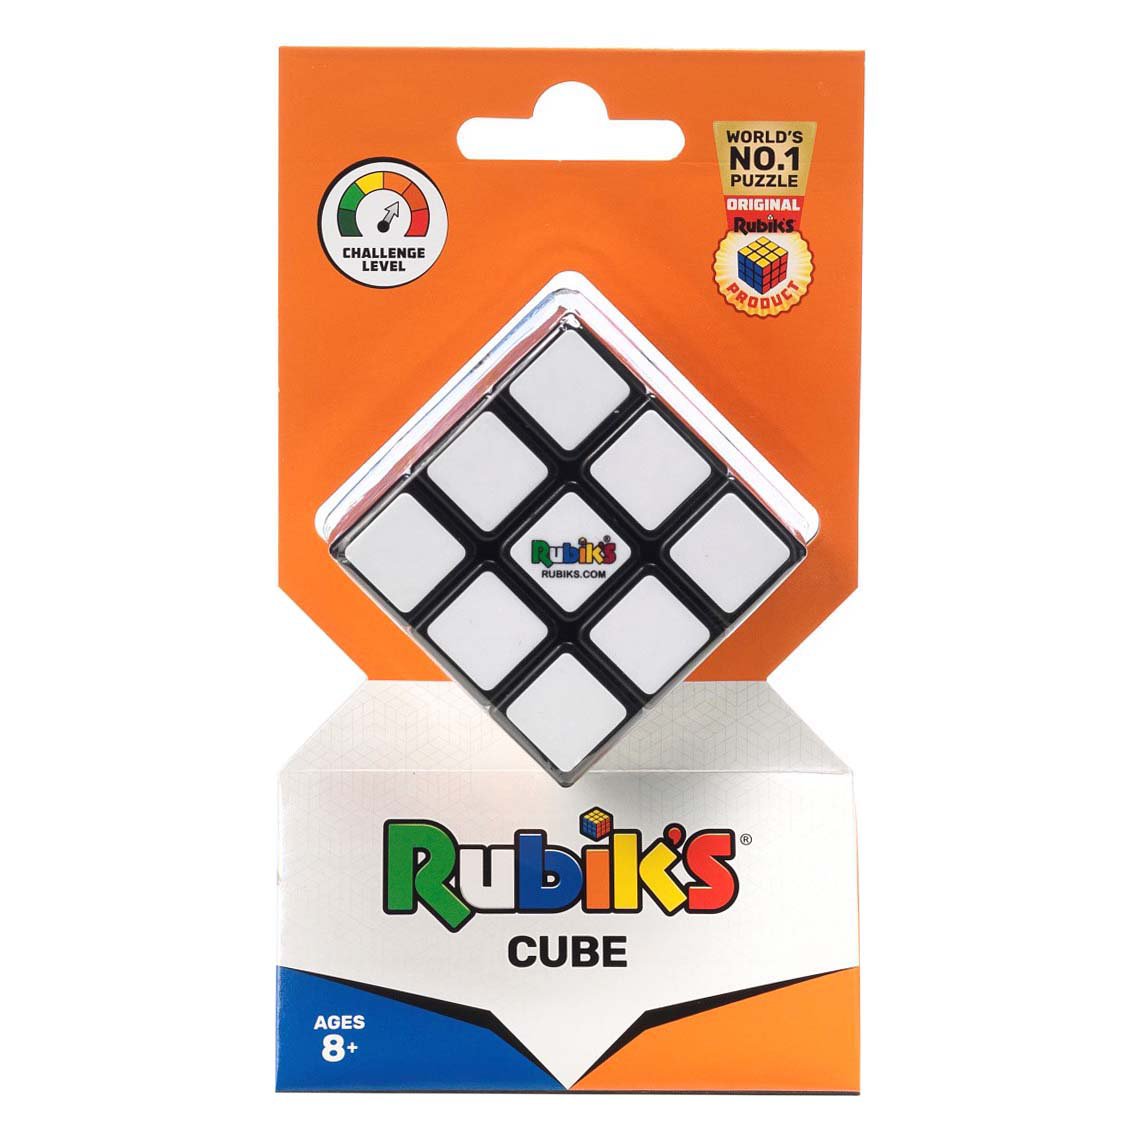 Rubik's Cube The Original 3x3 Cube 